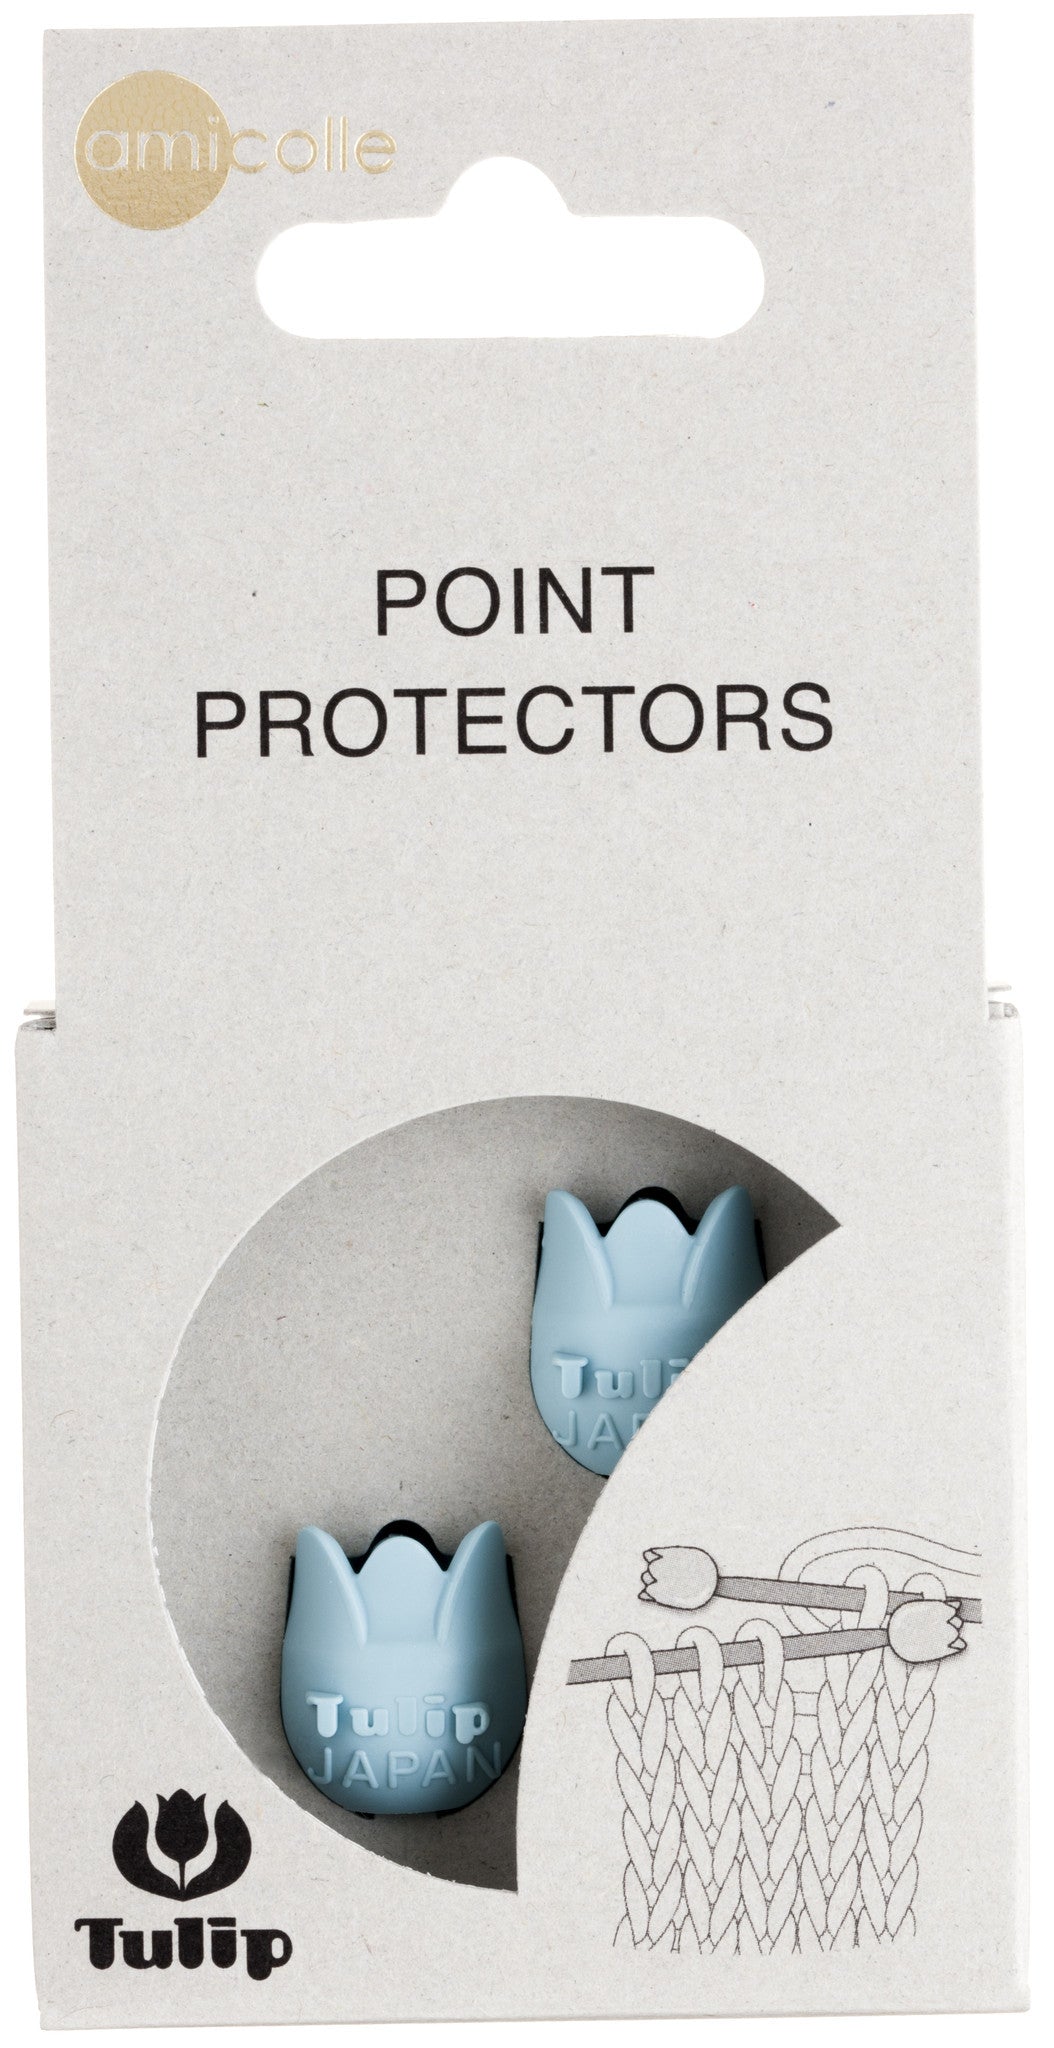 Tulip Point Protectors